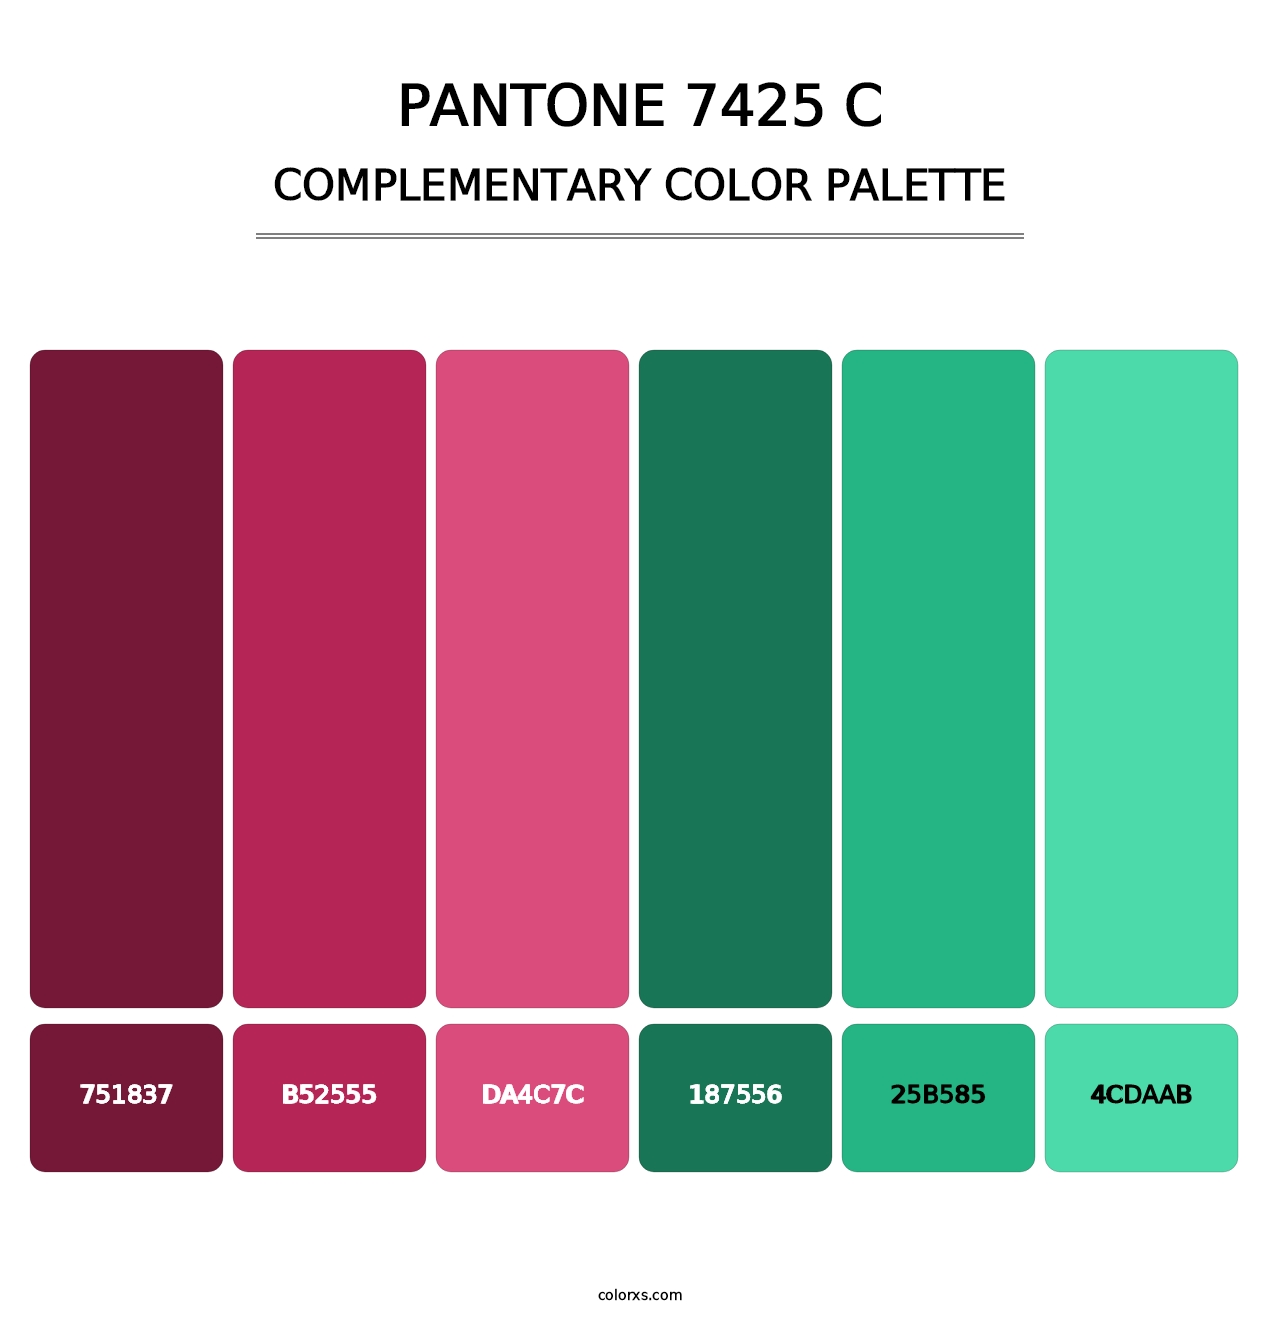 PANTONE 7425 C - Complementary Color Palette